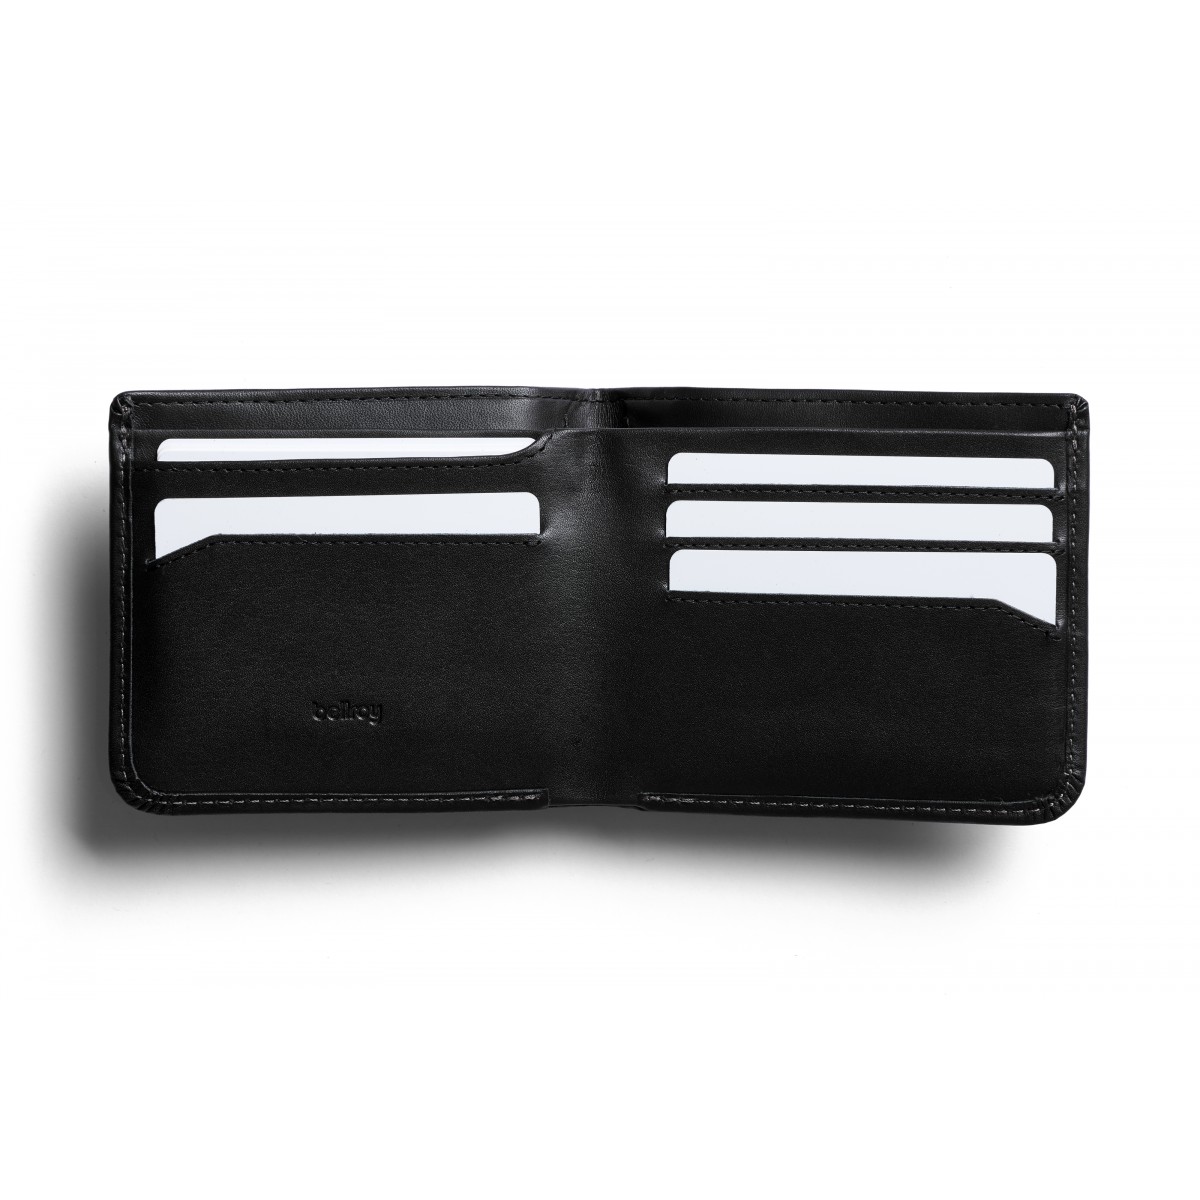 The quality of the Bellroy Bags & EDC Hide & Seek Wallet - RFID is